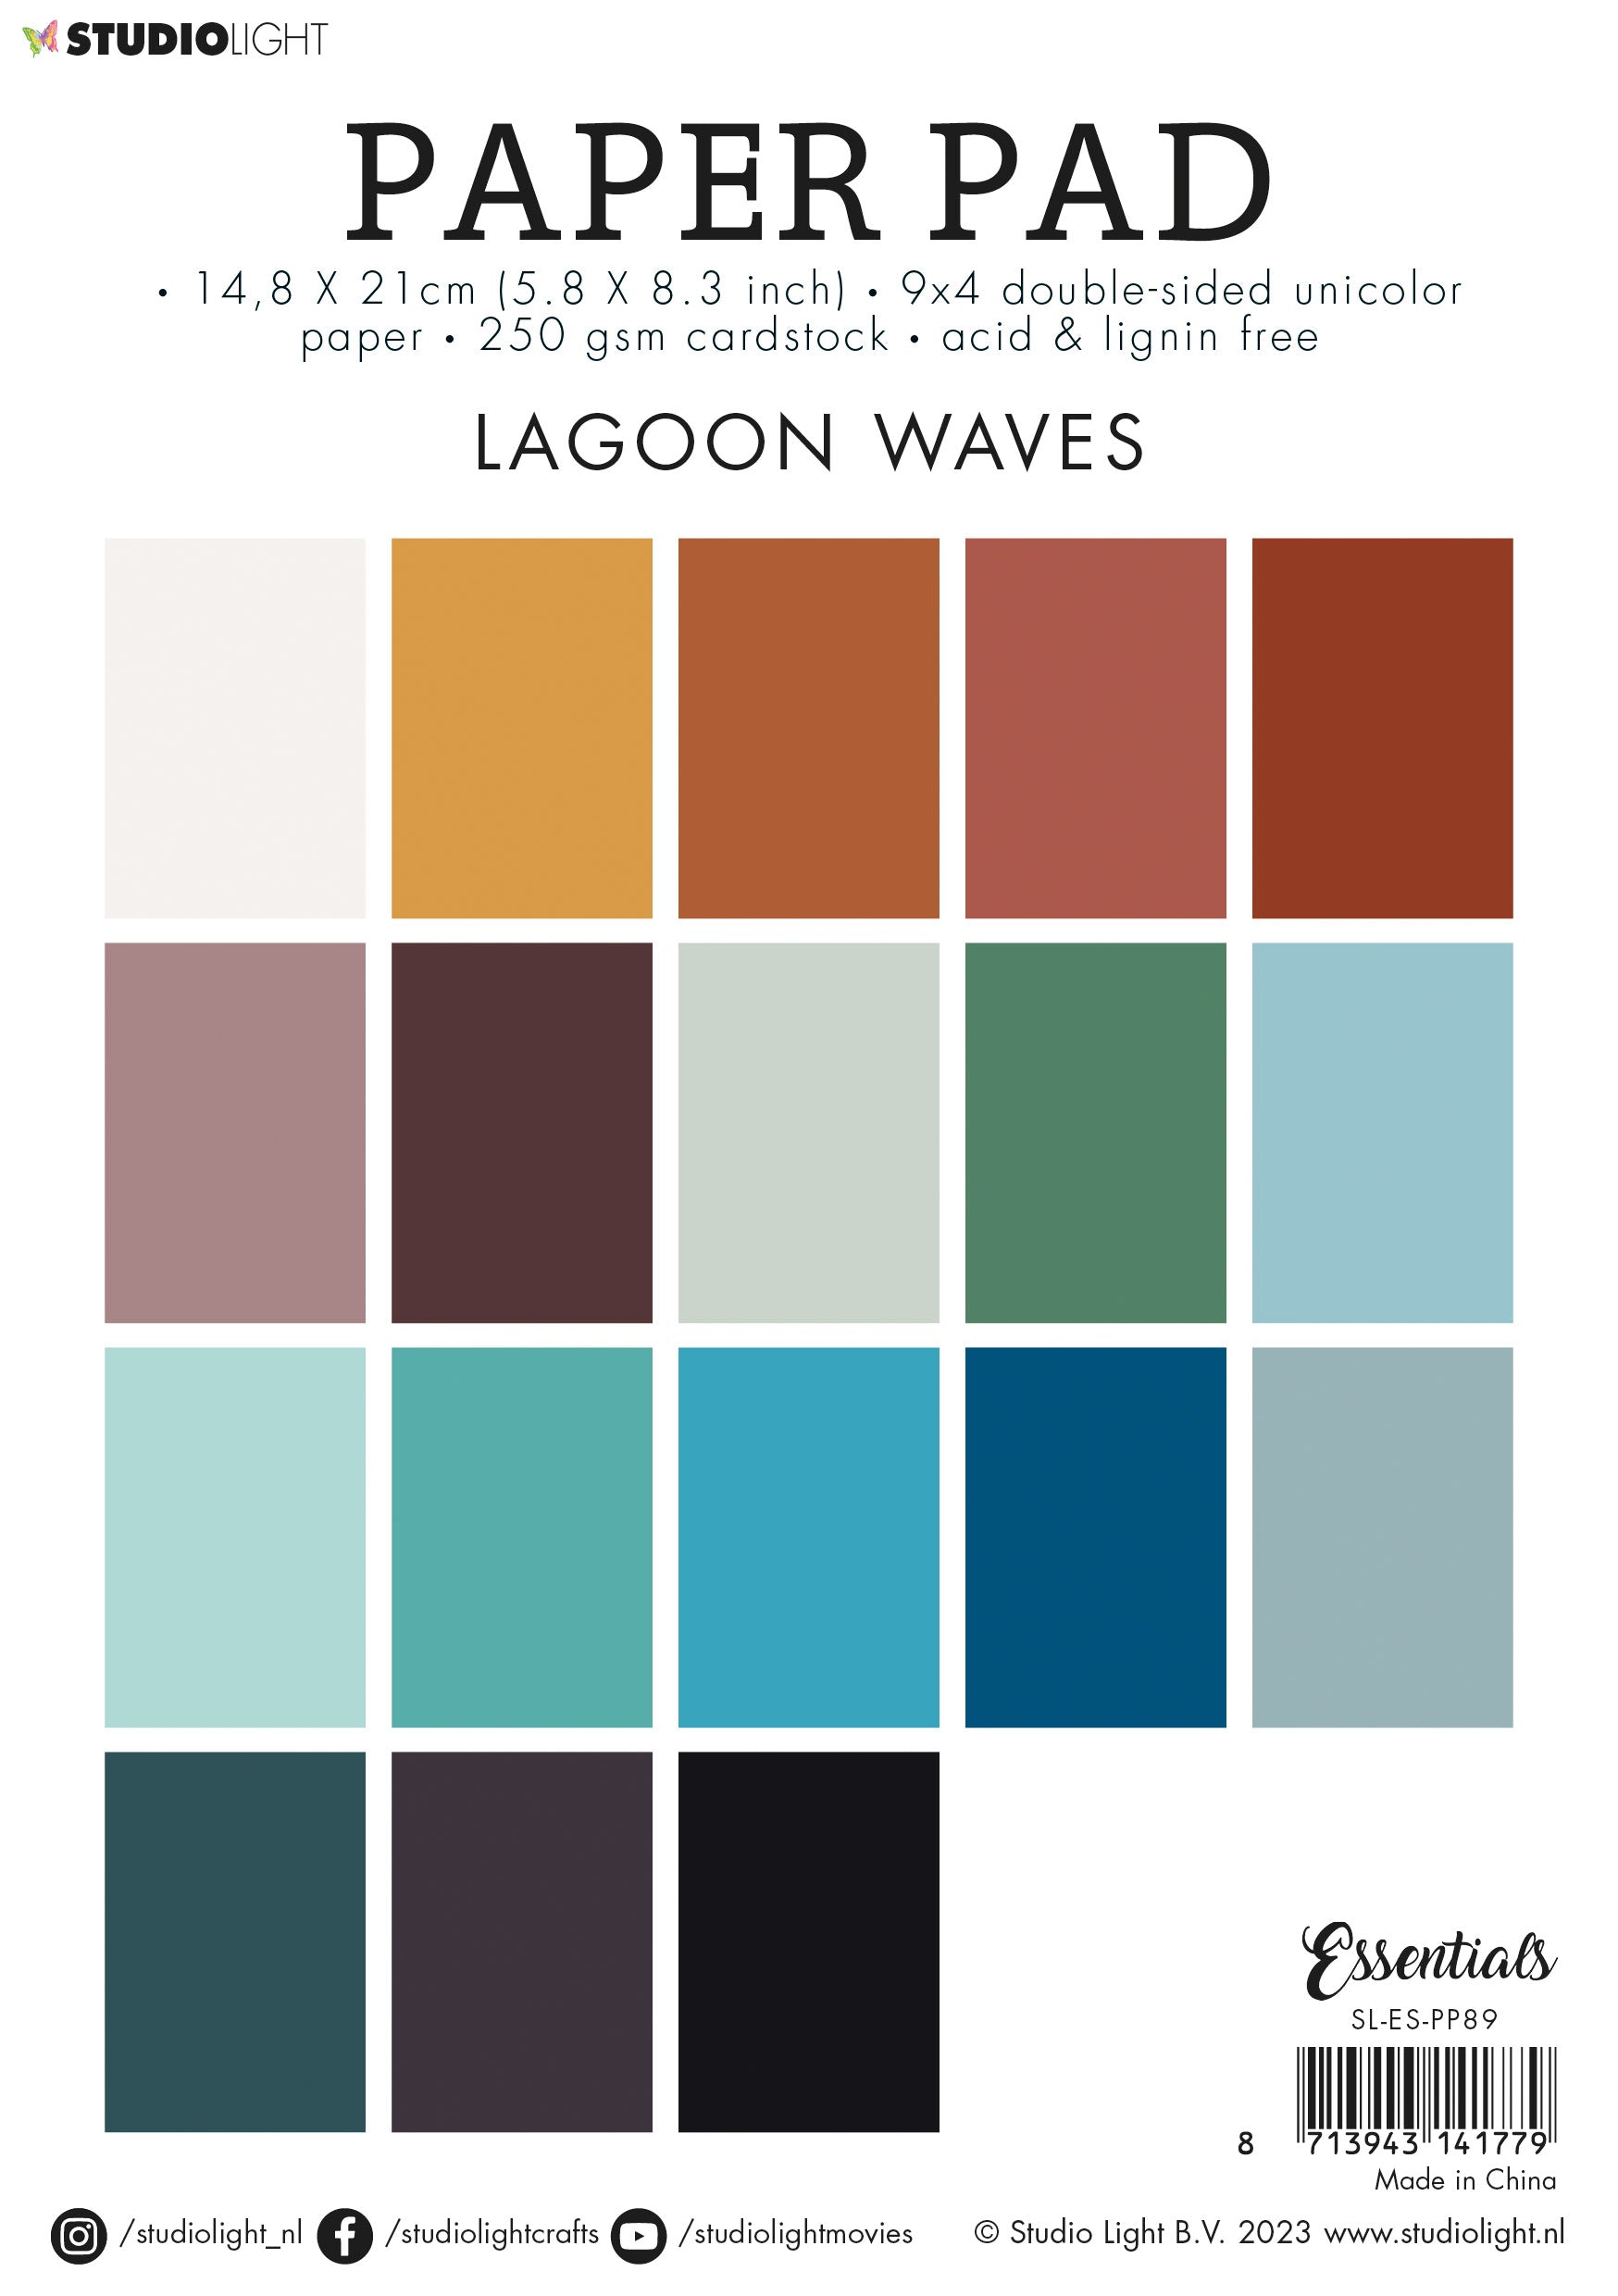 SL Paper Pad Unicolor Paper Lagoon Waves Essentials 210x148x9mm 36 SH nr.89